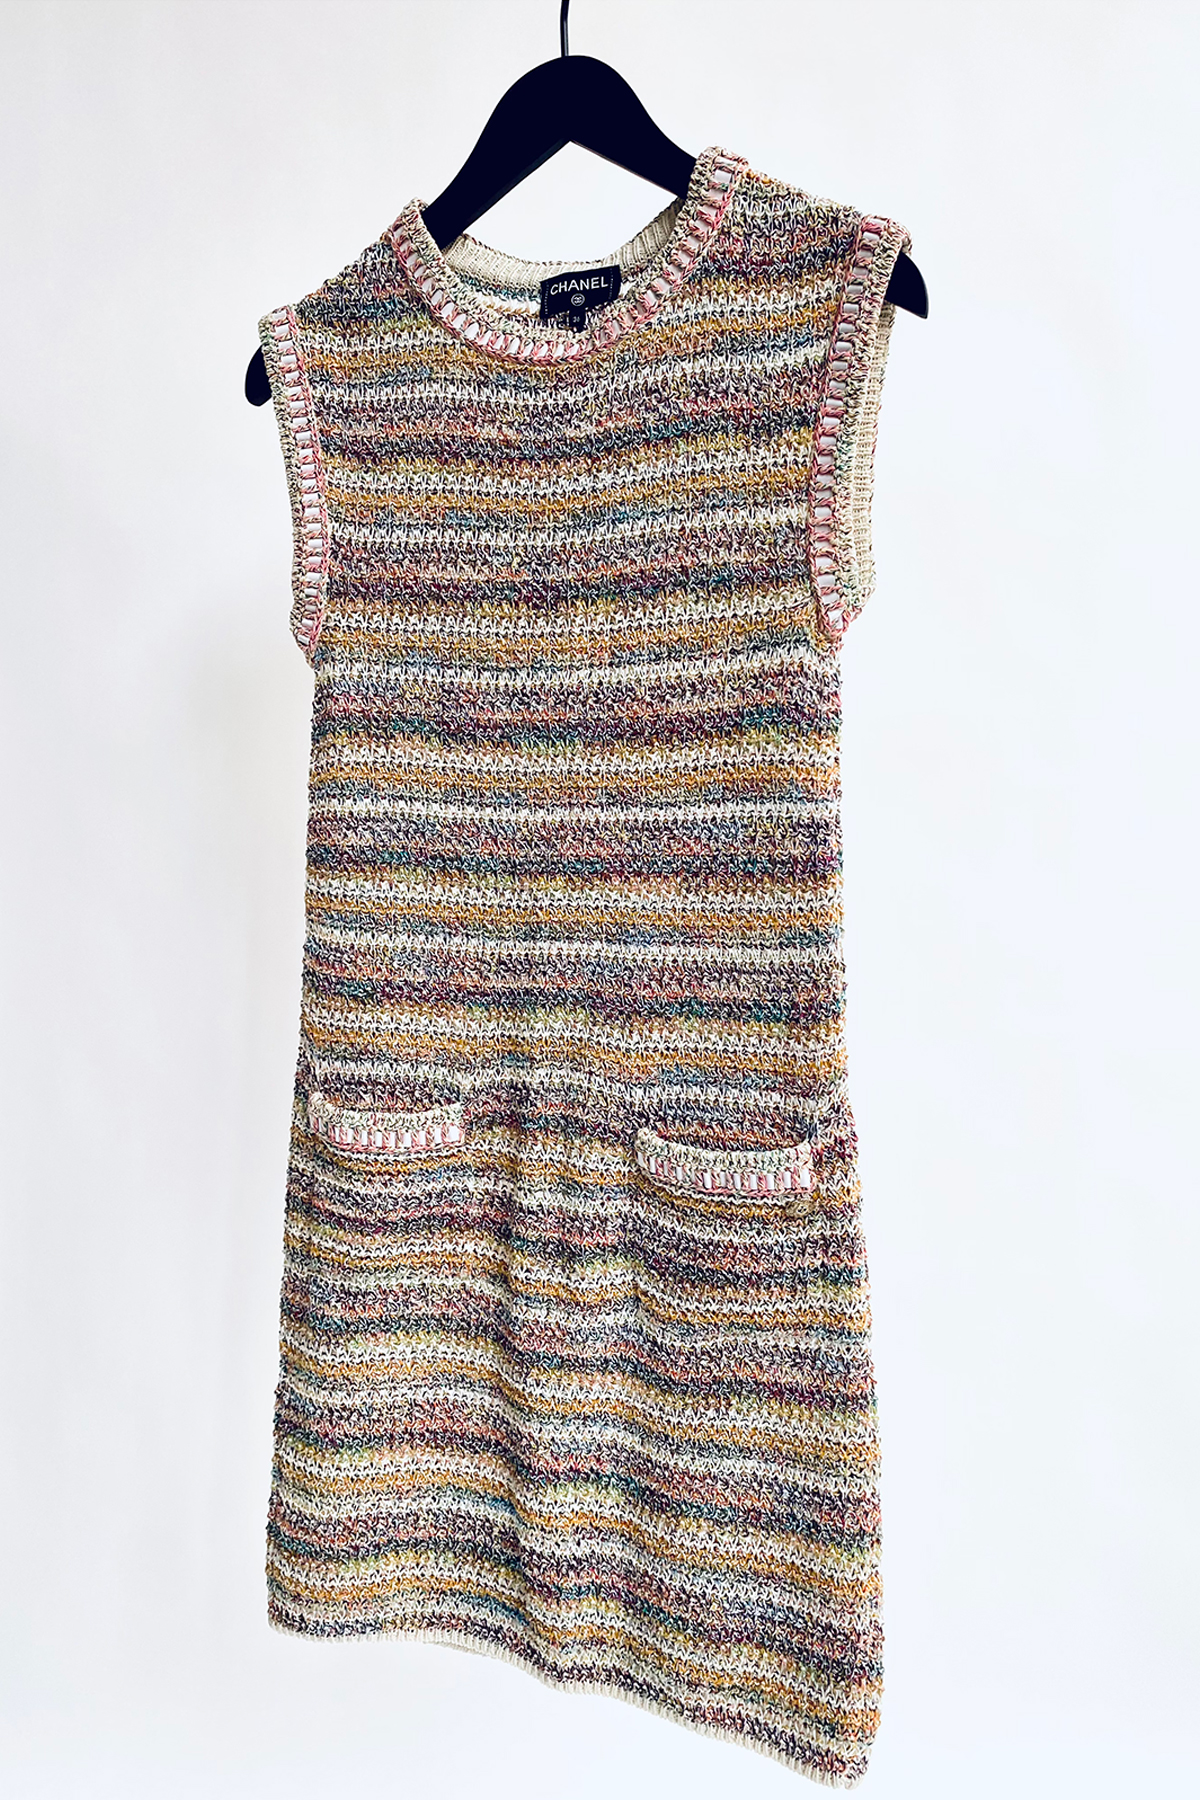 Chanel dress no sleeve light color knit FR 36